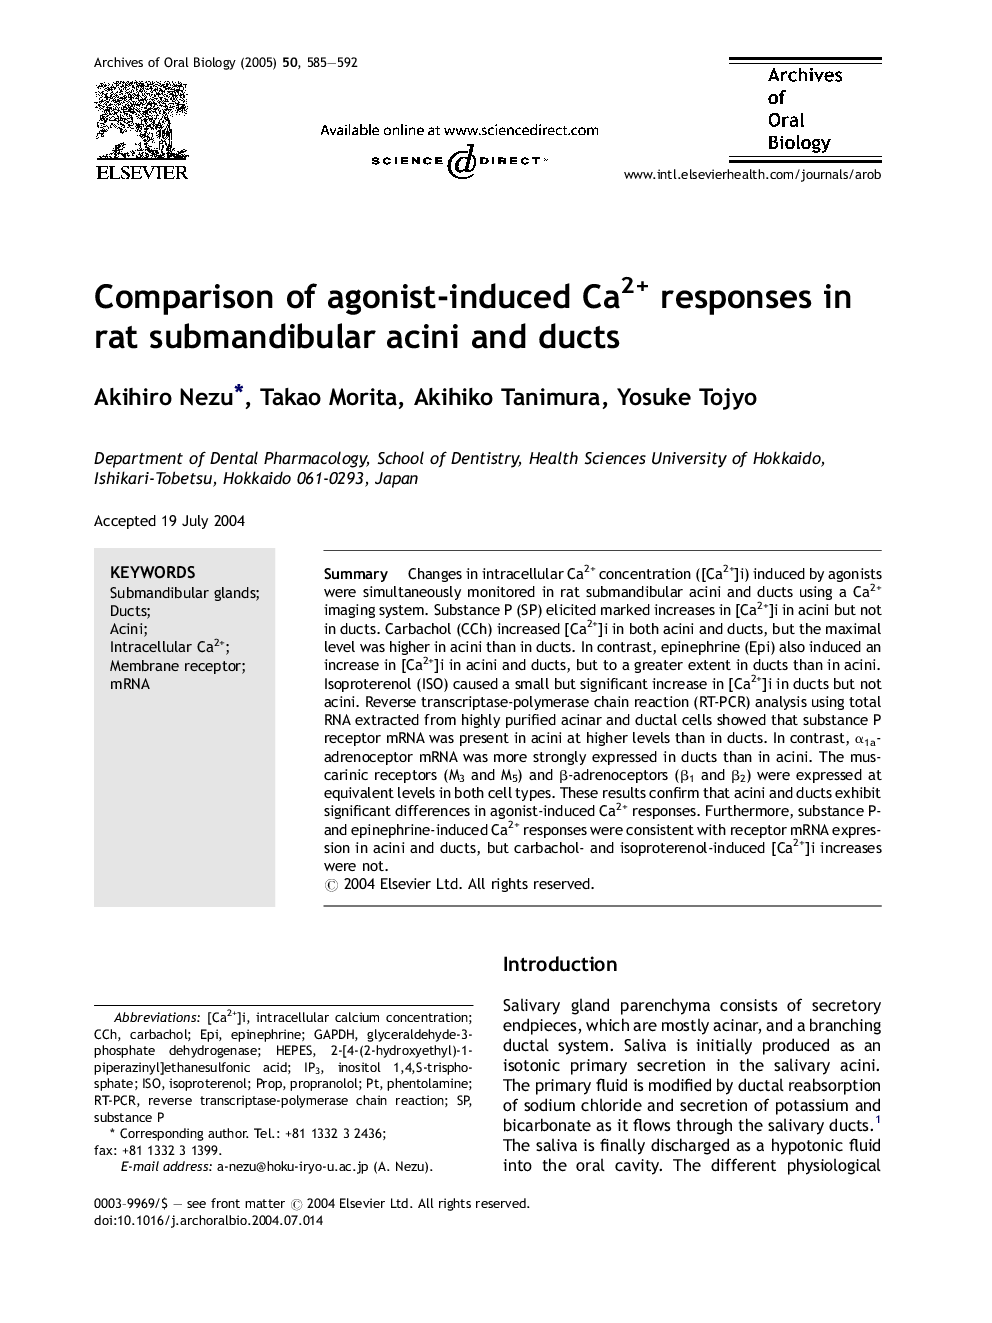 Comparison of agonist-induced Ca2+ responses in rat submandibular acini and ducts